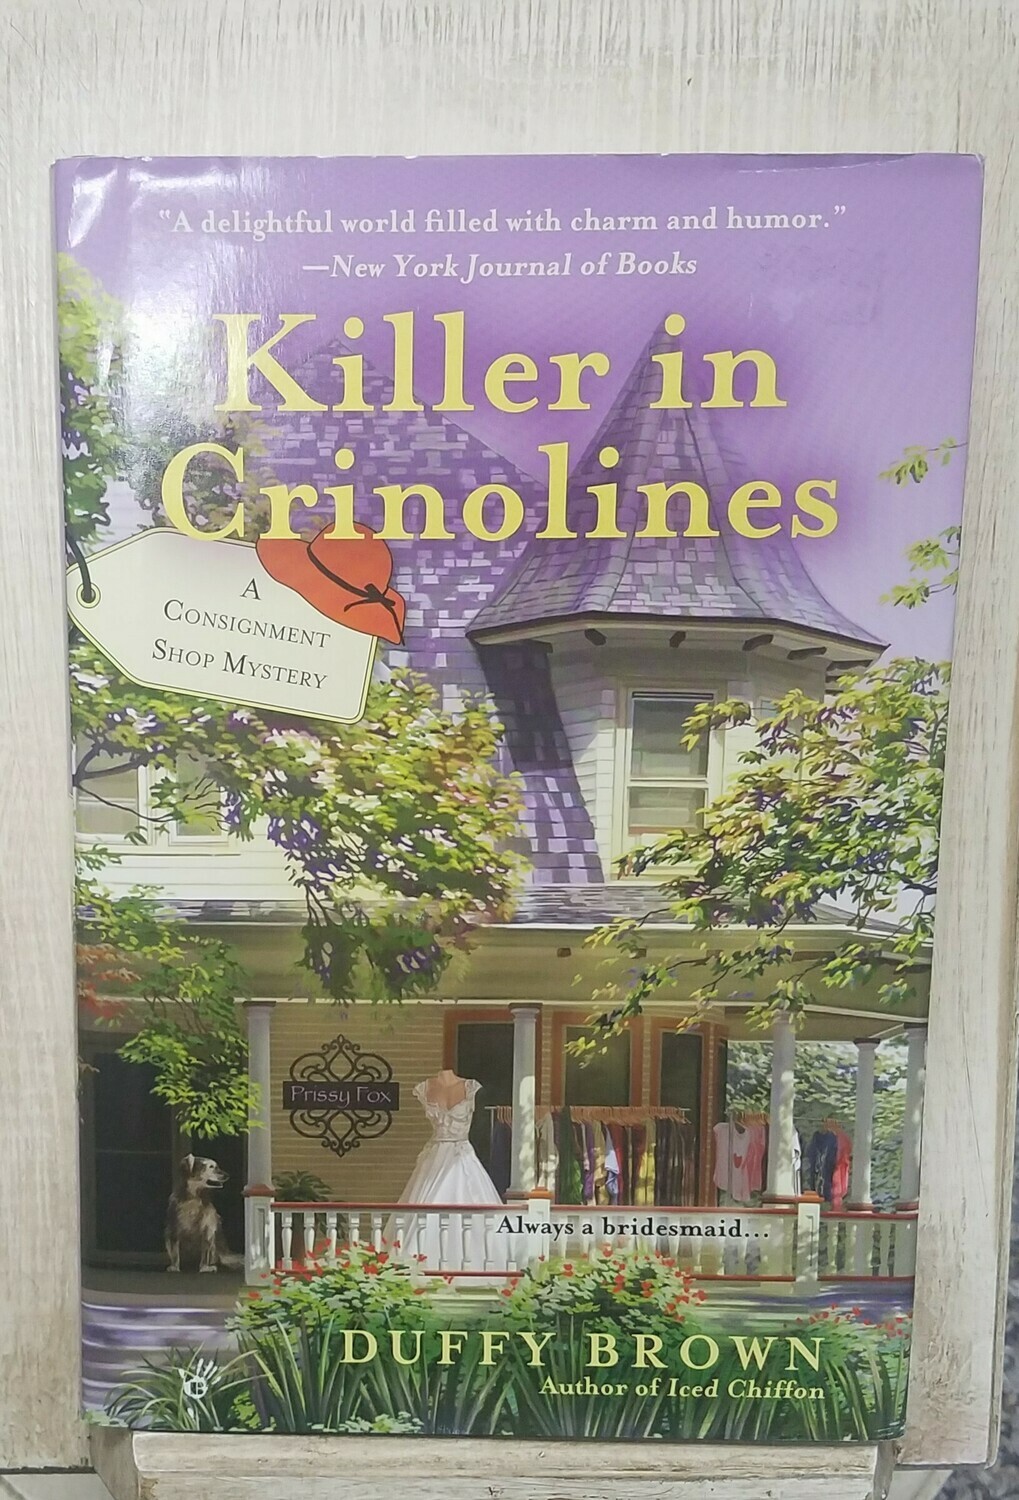 Killer in Crinolines by Duffy Brown